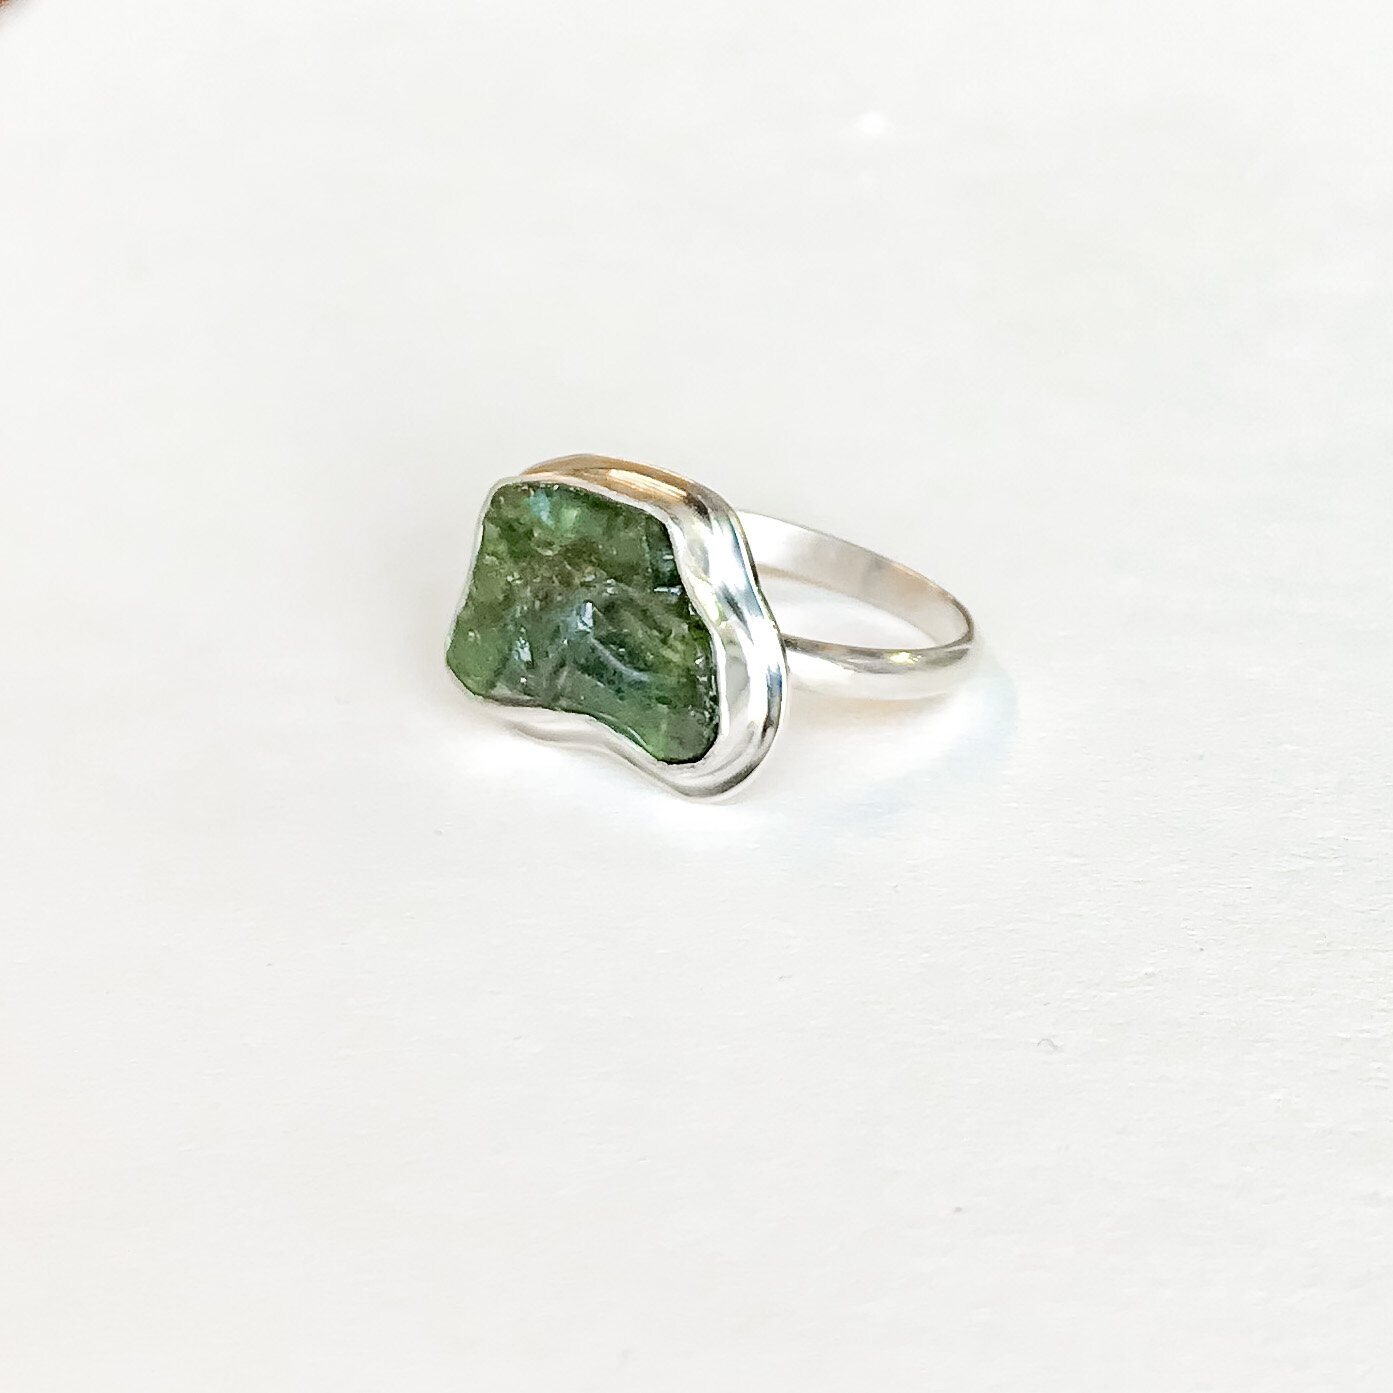 gift for her everyday jewelry Tiny Pear Moldavite Ring Handmade natural Moldavite jewelry natural green Moldavite ring 10 healing gemstone minimalist jewelry for her 